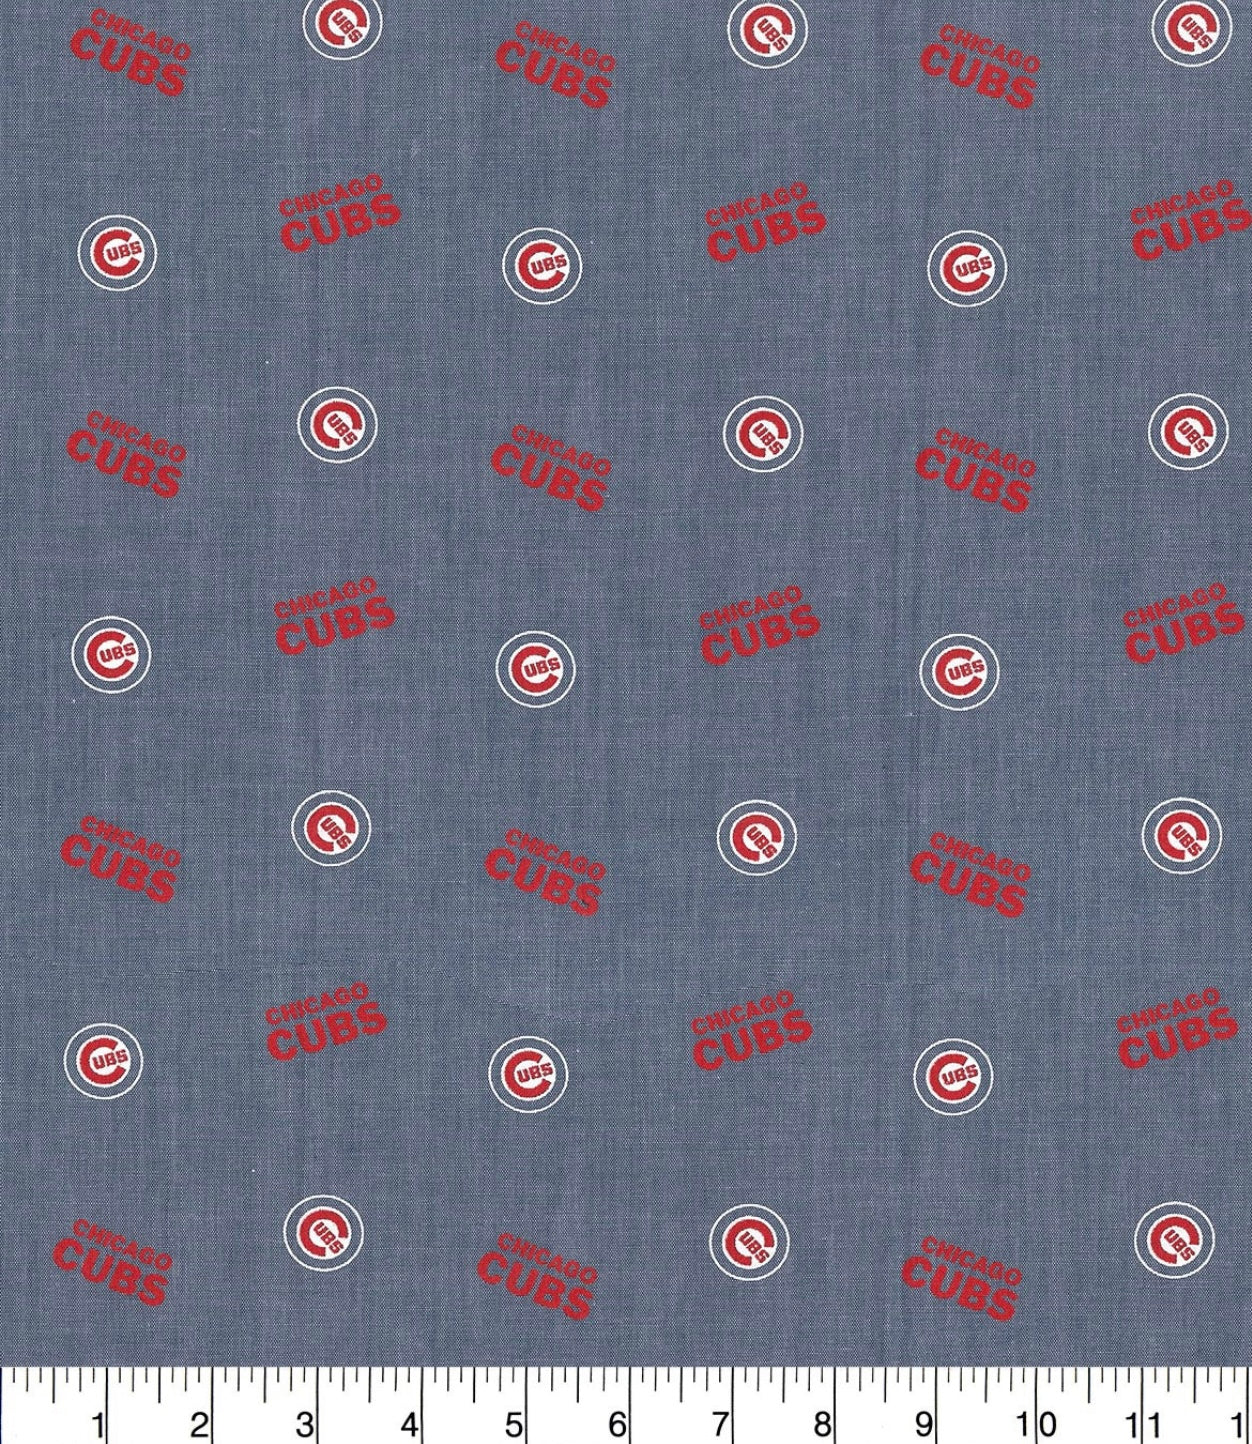 Custom Handmade Jeff Cap in Chicago Cubs Print Fabric